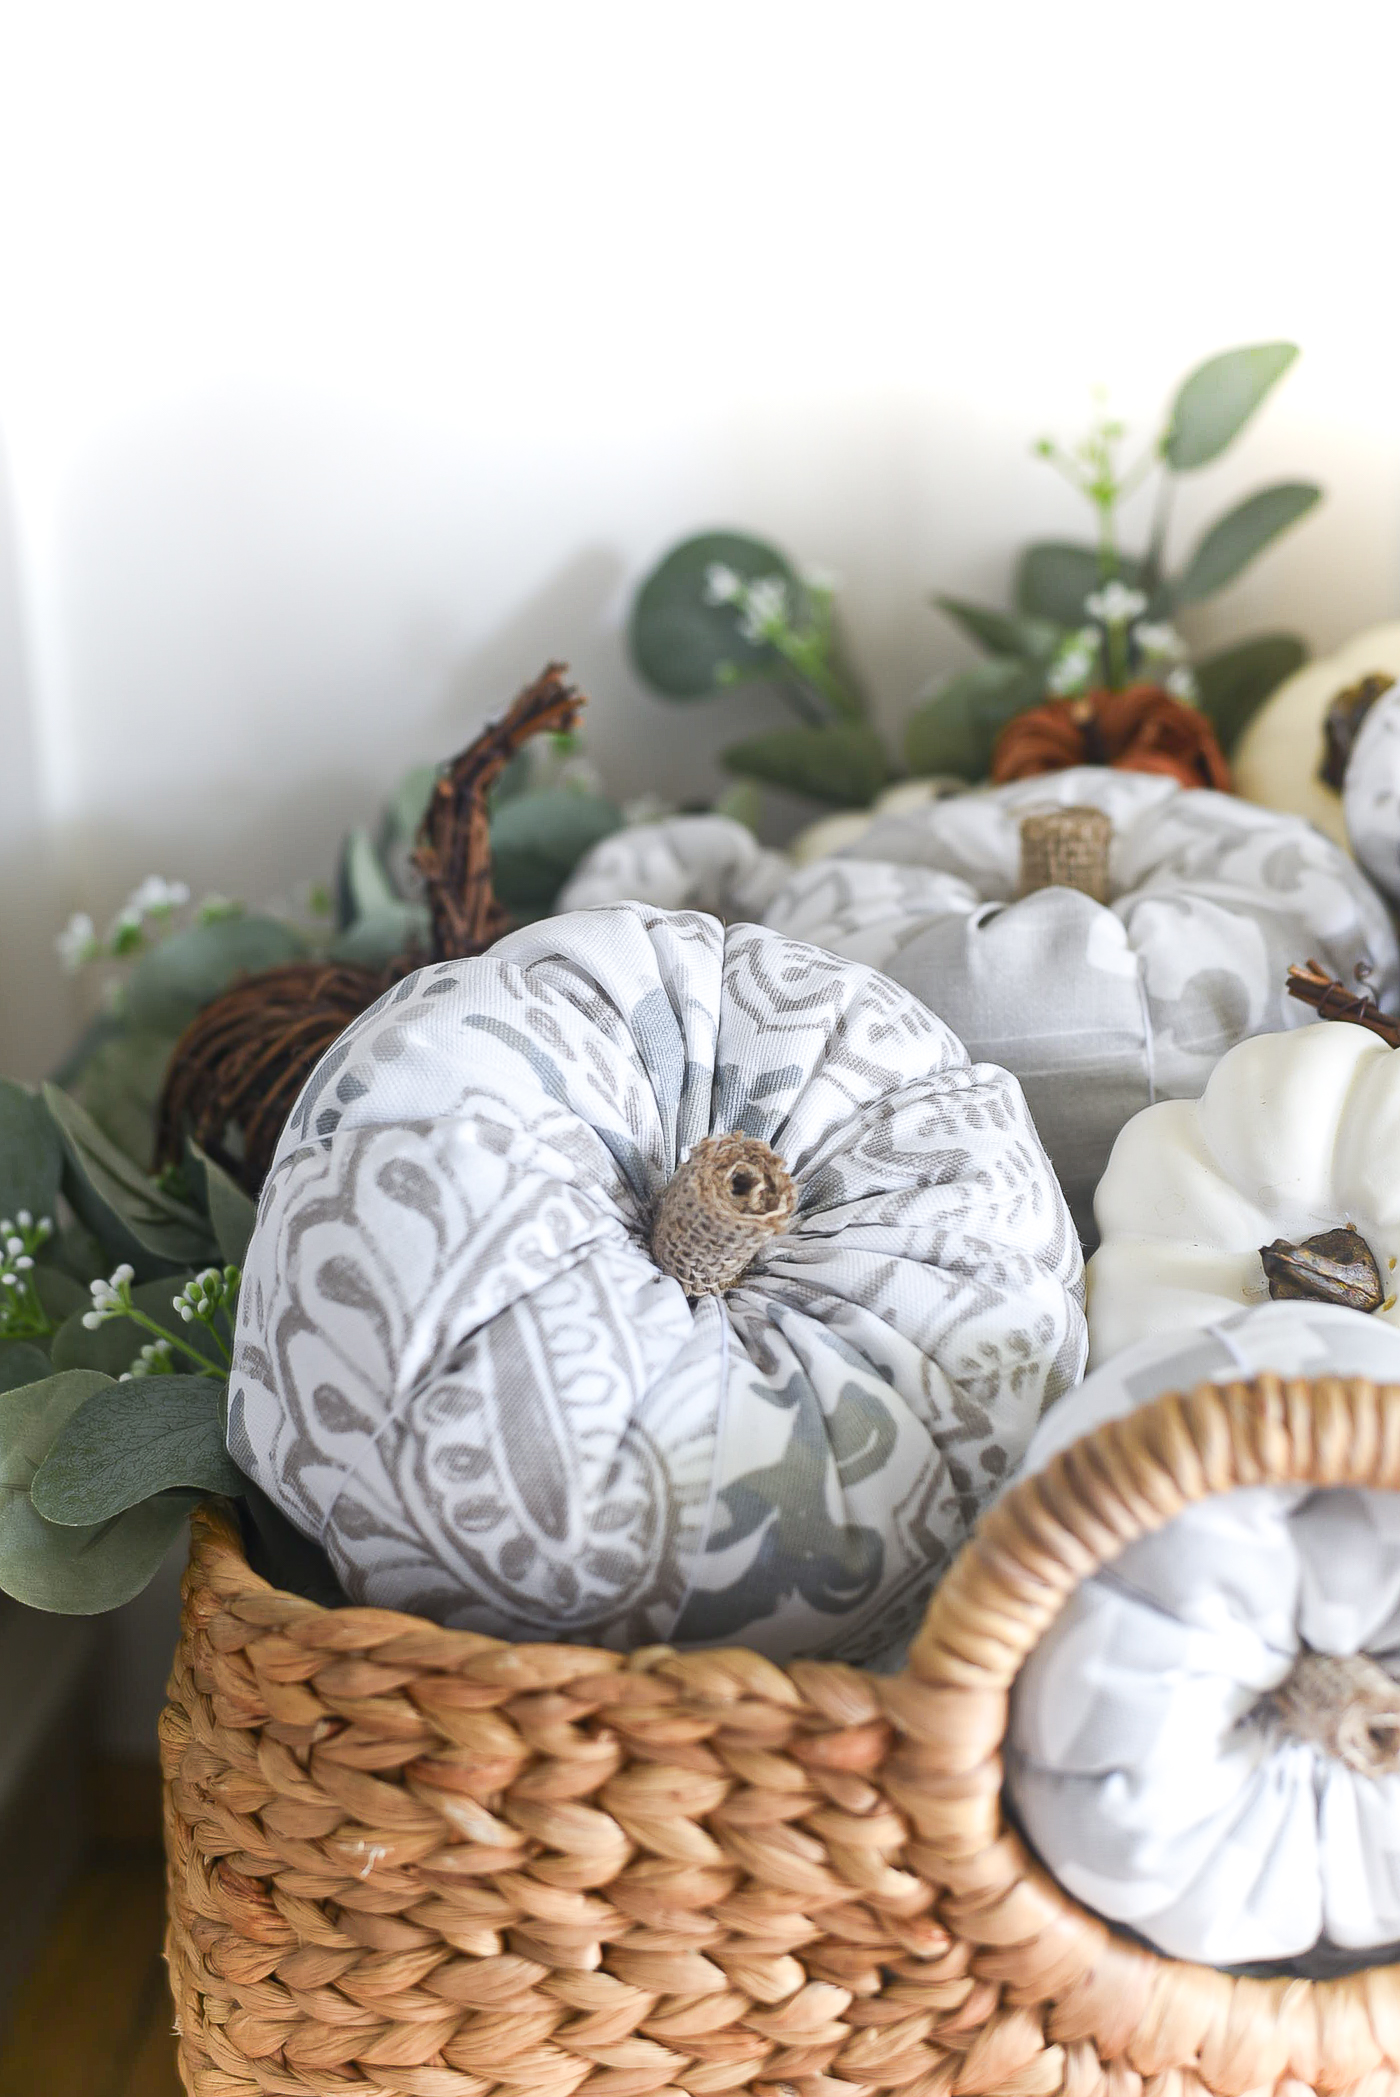 Fabric Pumpkins -Stuffed Pumpkins - DIY Fabric Pumpkins - How To Make Fabric Stuffed Pumpkins